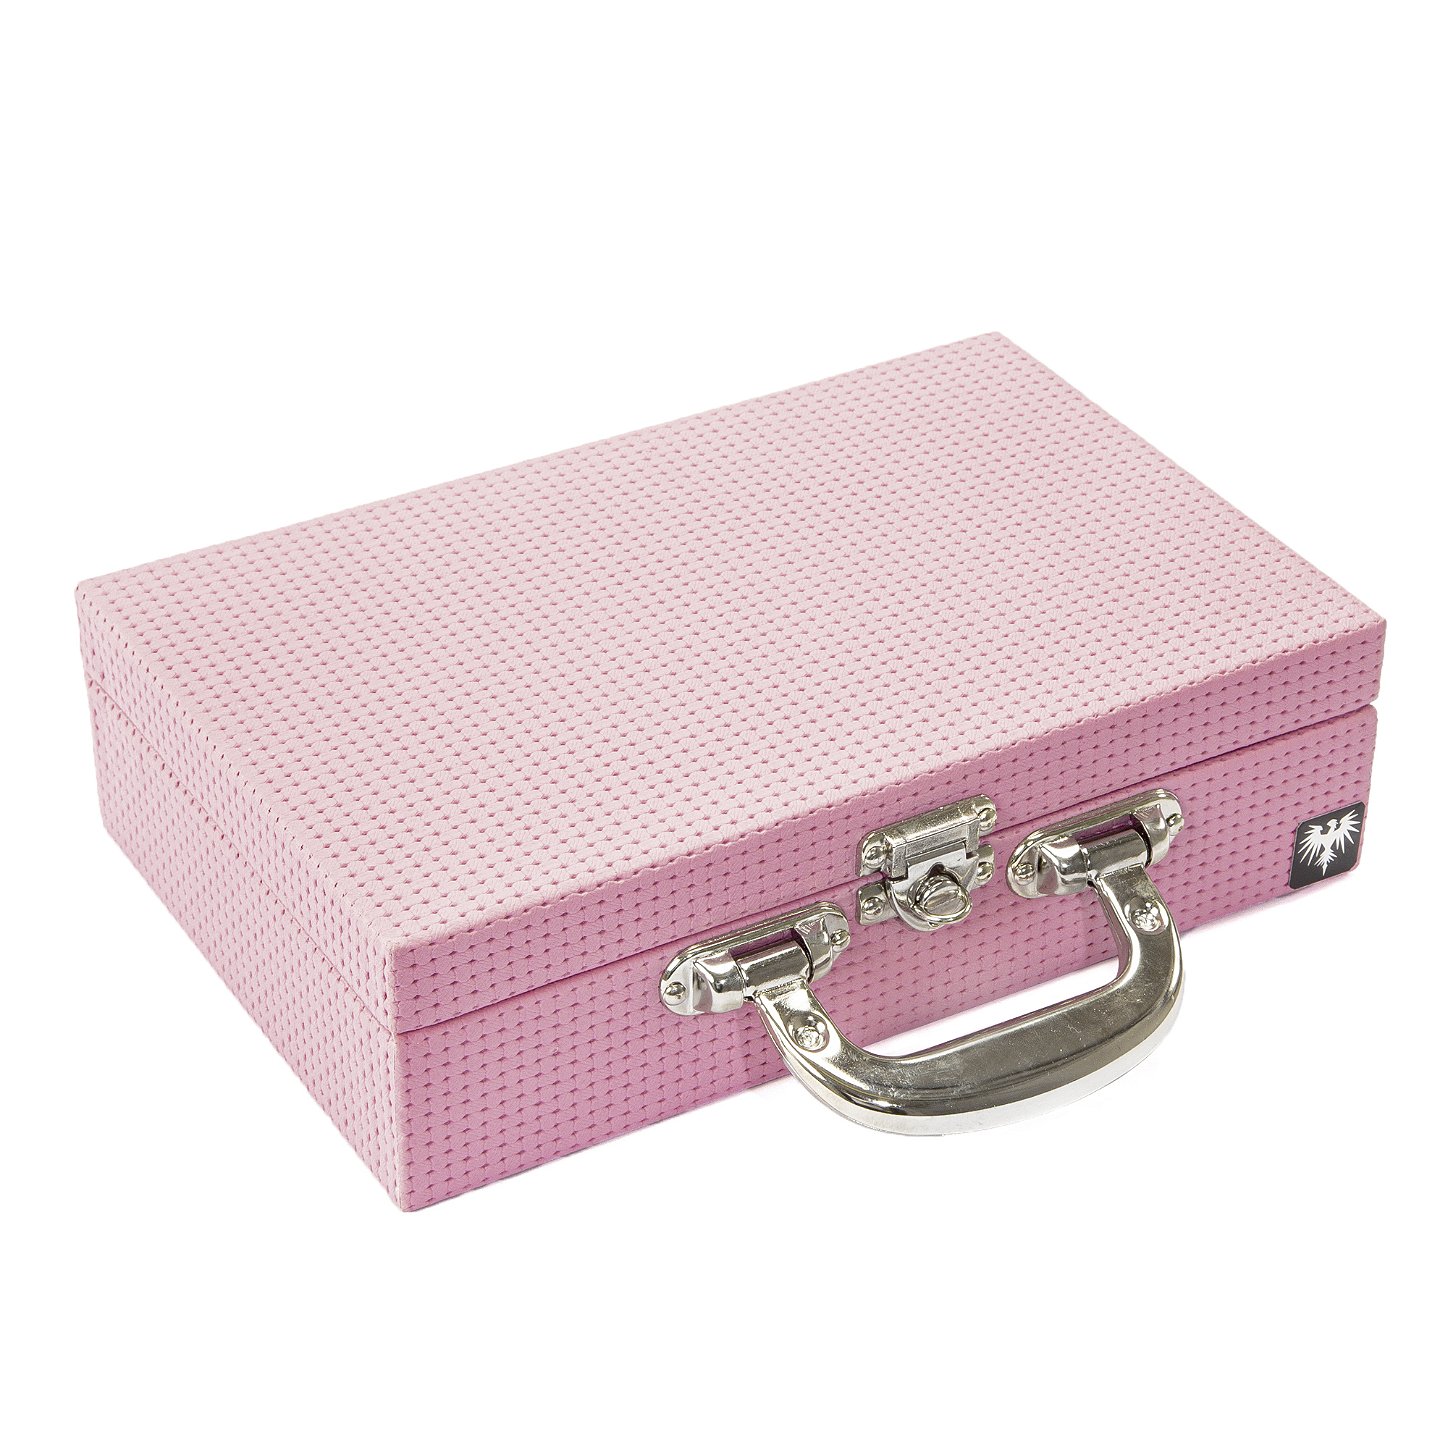 maleta-porta-joias-couro-ecologico-croco-rosa-rosa-imagem-8.jpg